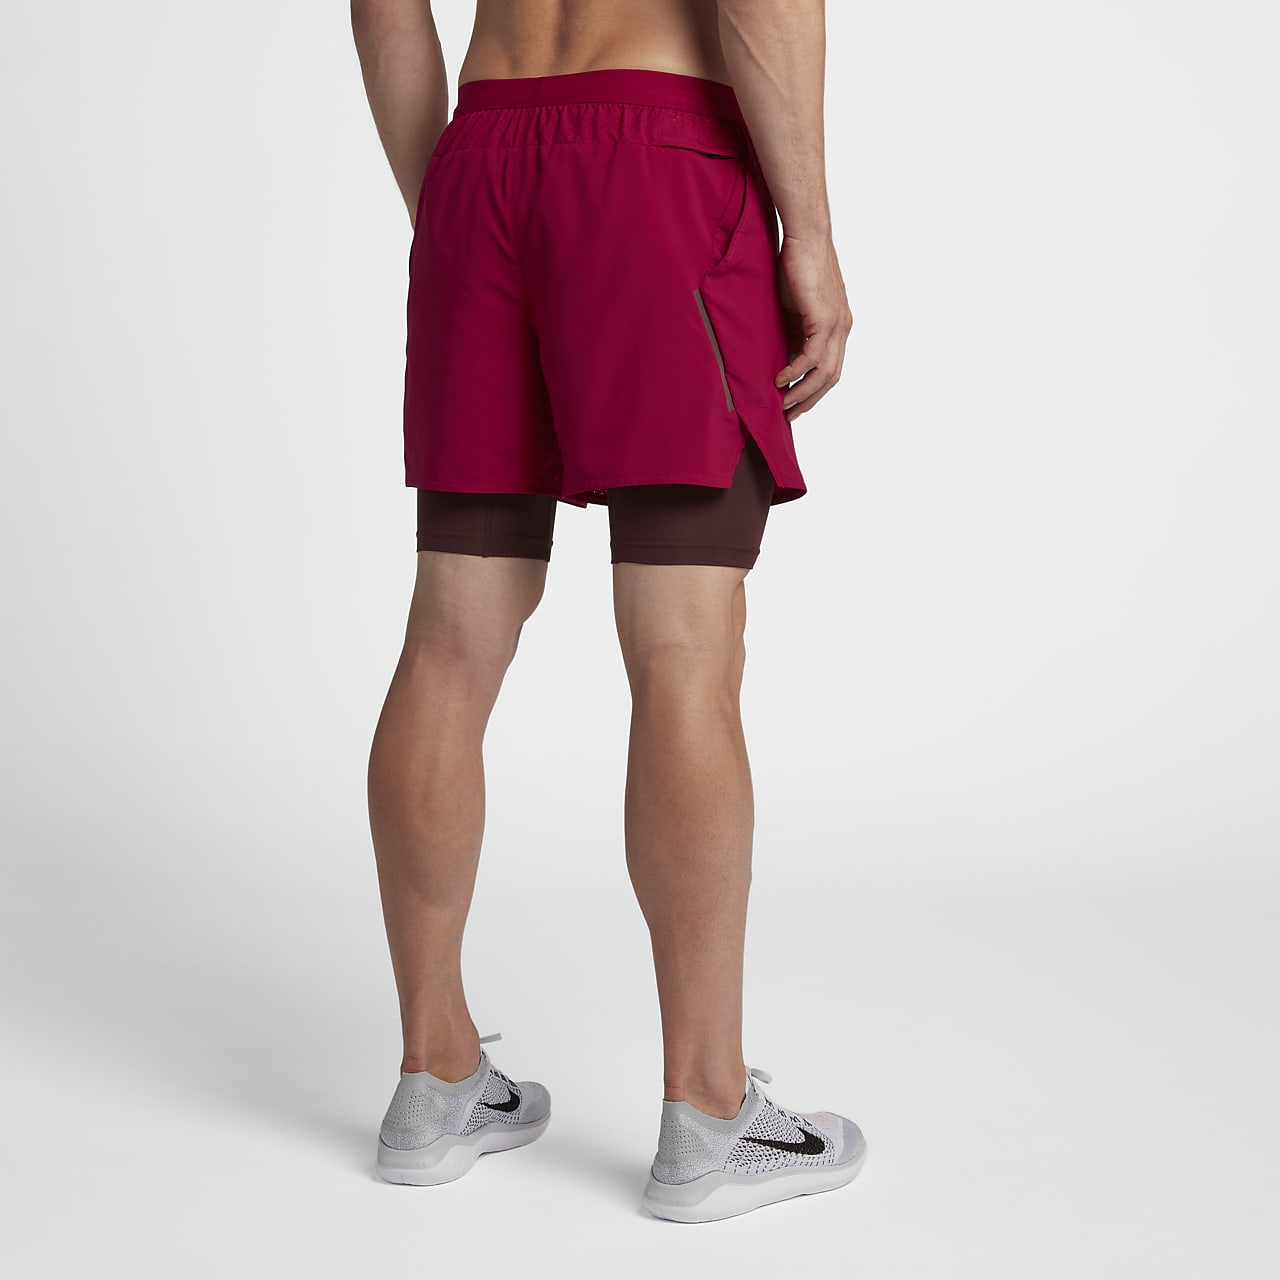 12.5cm approx.) Running Shorts. Nike ID